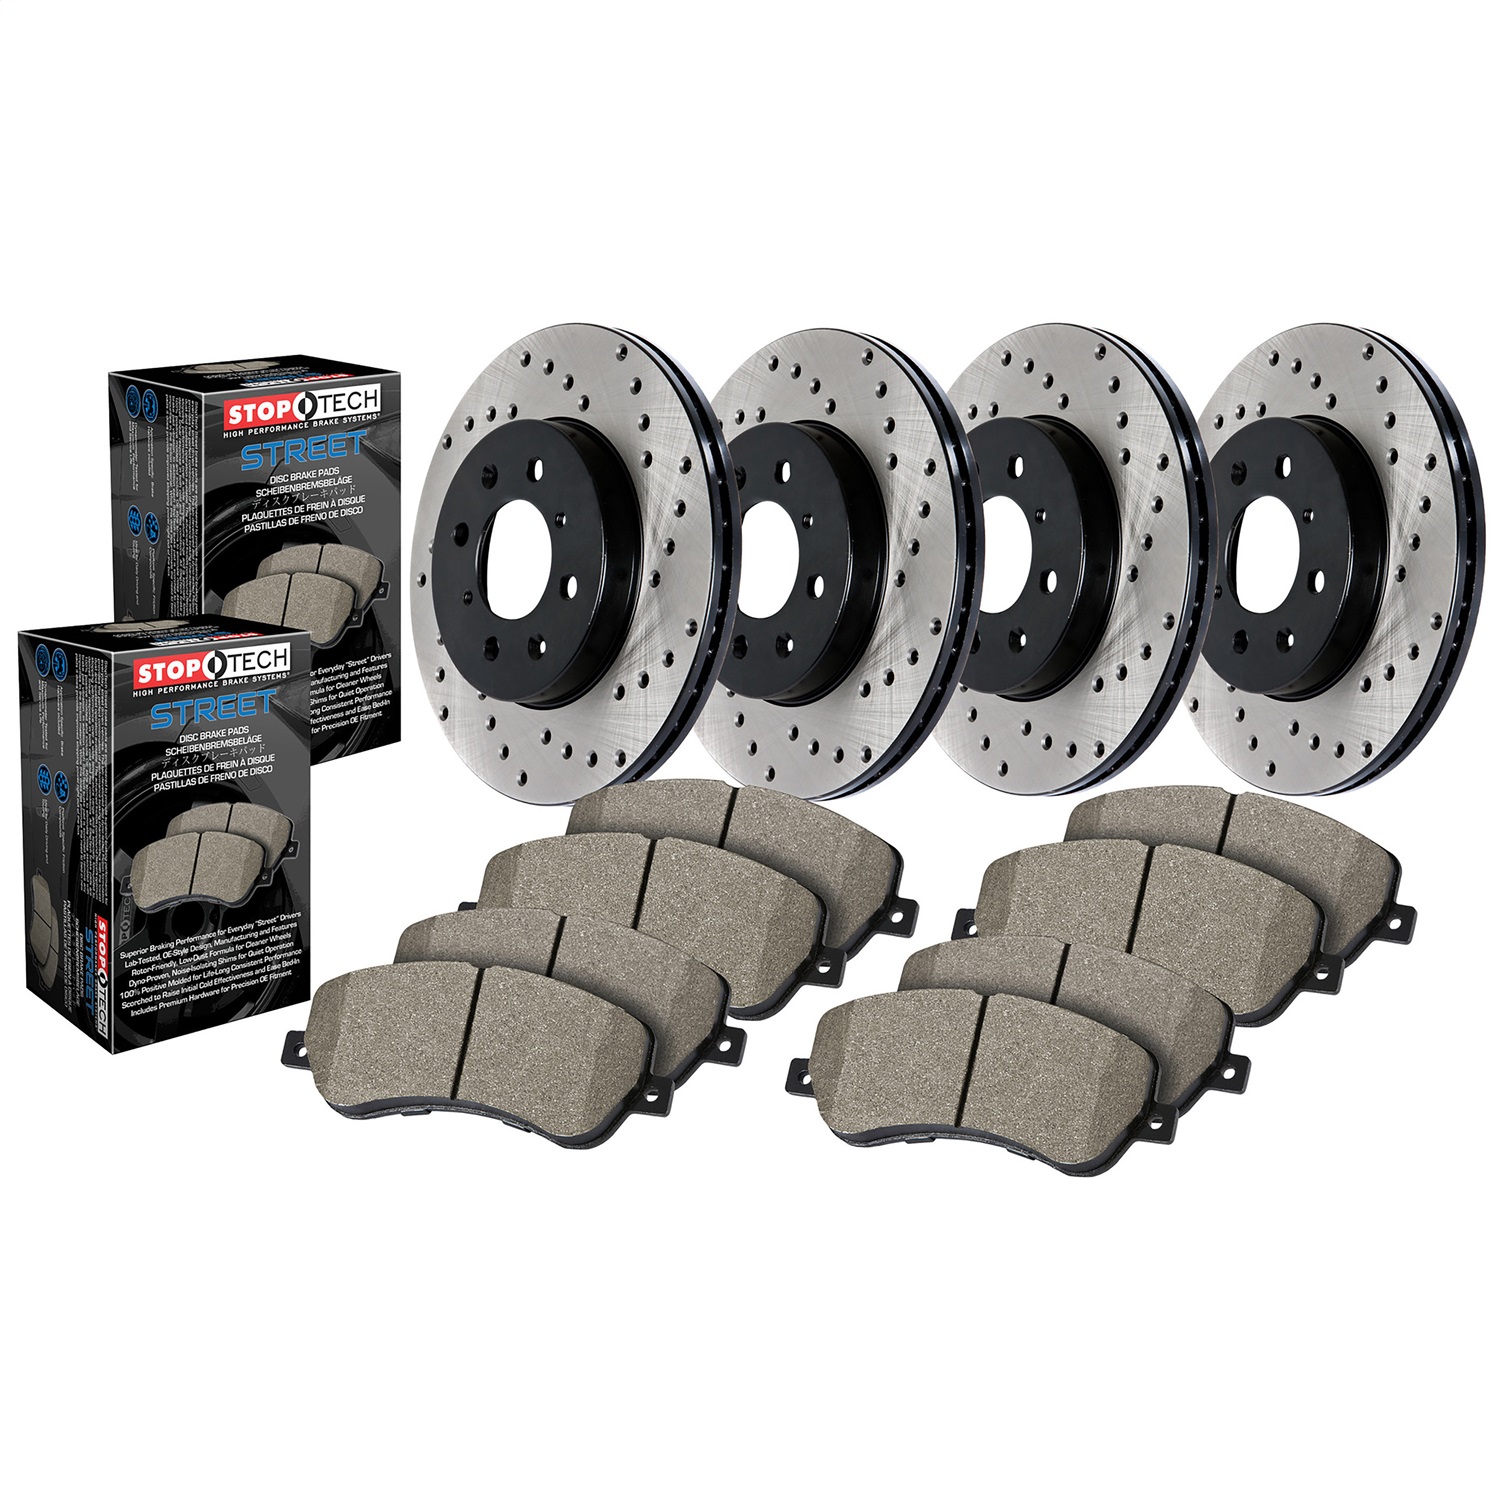 StopTech 936.40036 Street - 4 Wheel Disc Brake Kit w/Cross-Drilled Rotor